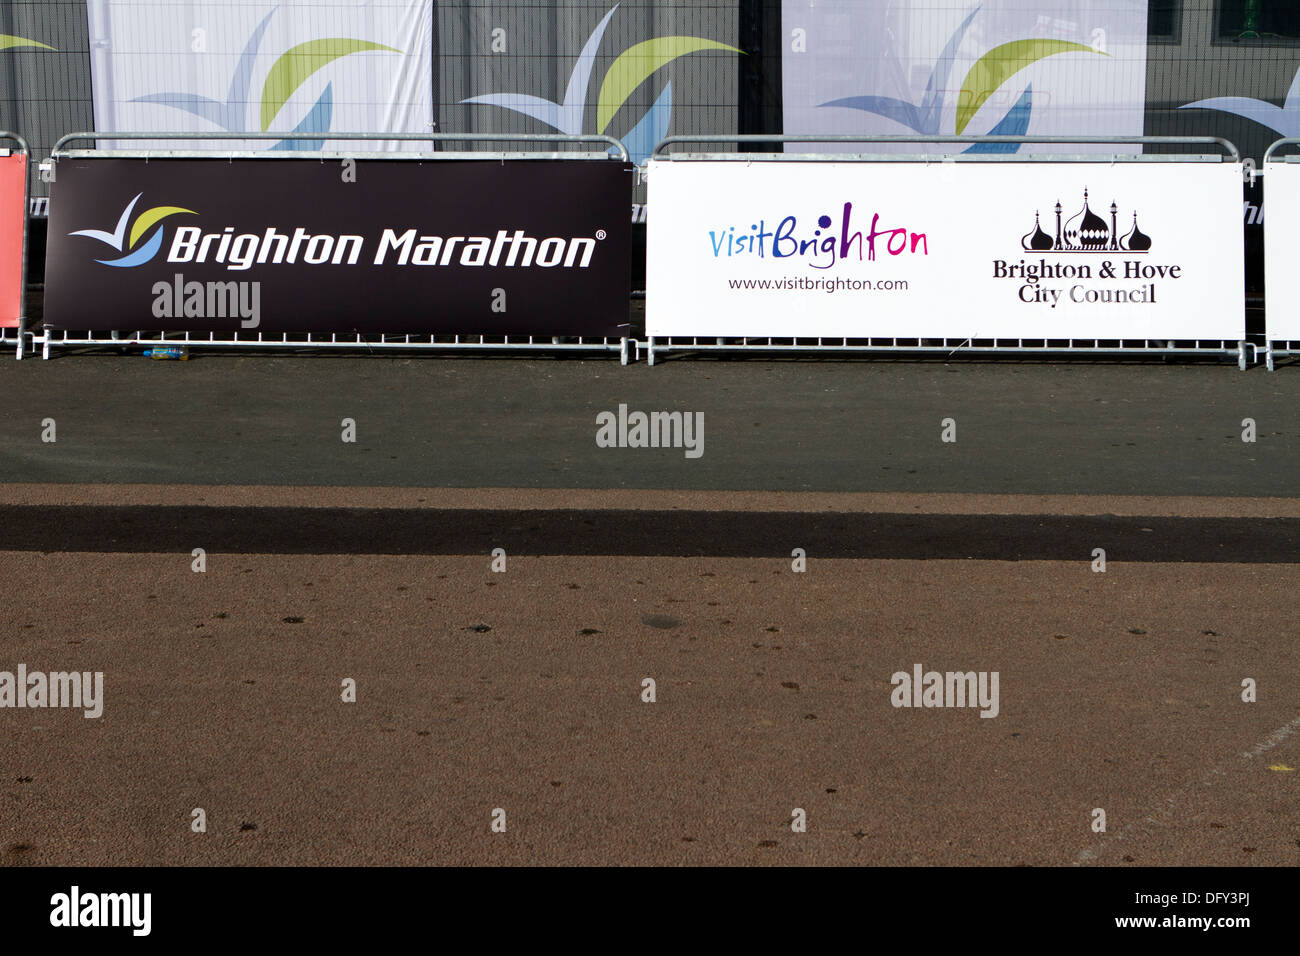 Crowd barrier advertising hoardings at the Brighton Marathon. Stock Photo